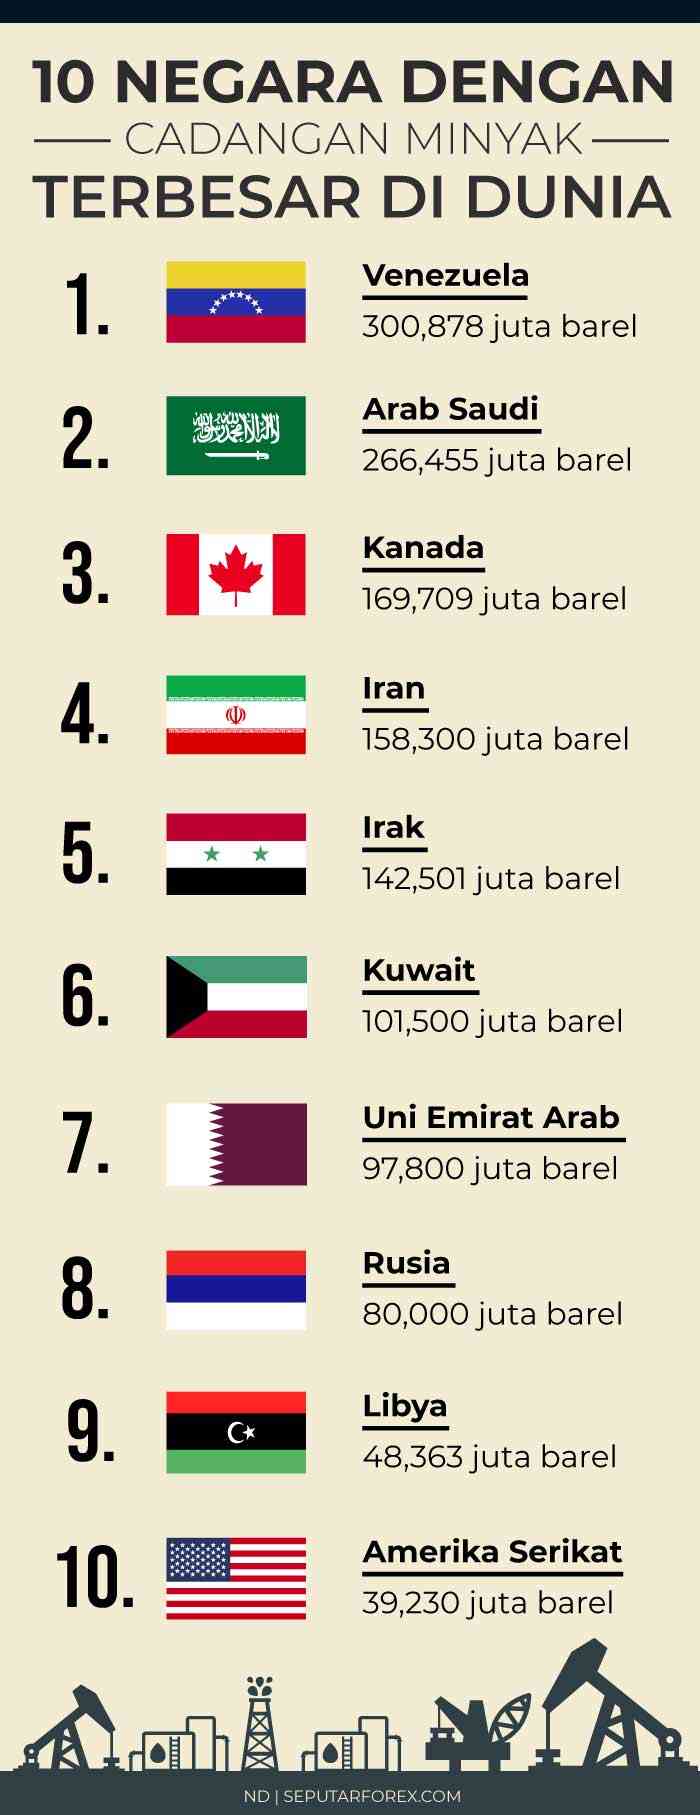 Negara penghasil minyak bumi terbesar di dunia adalah